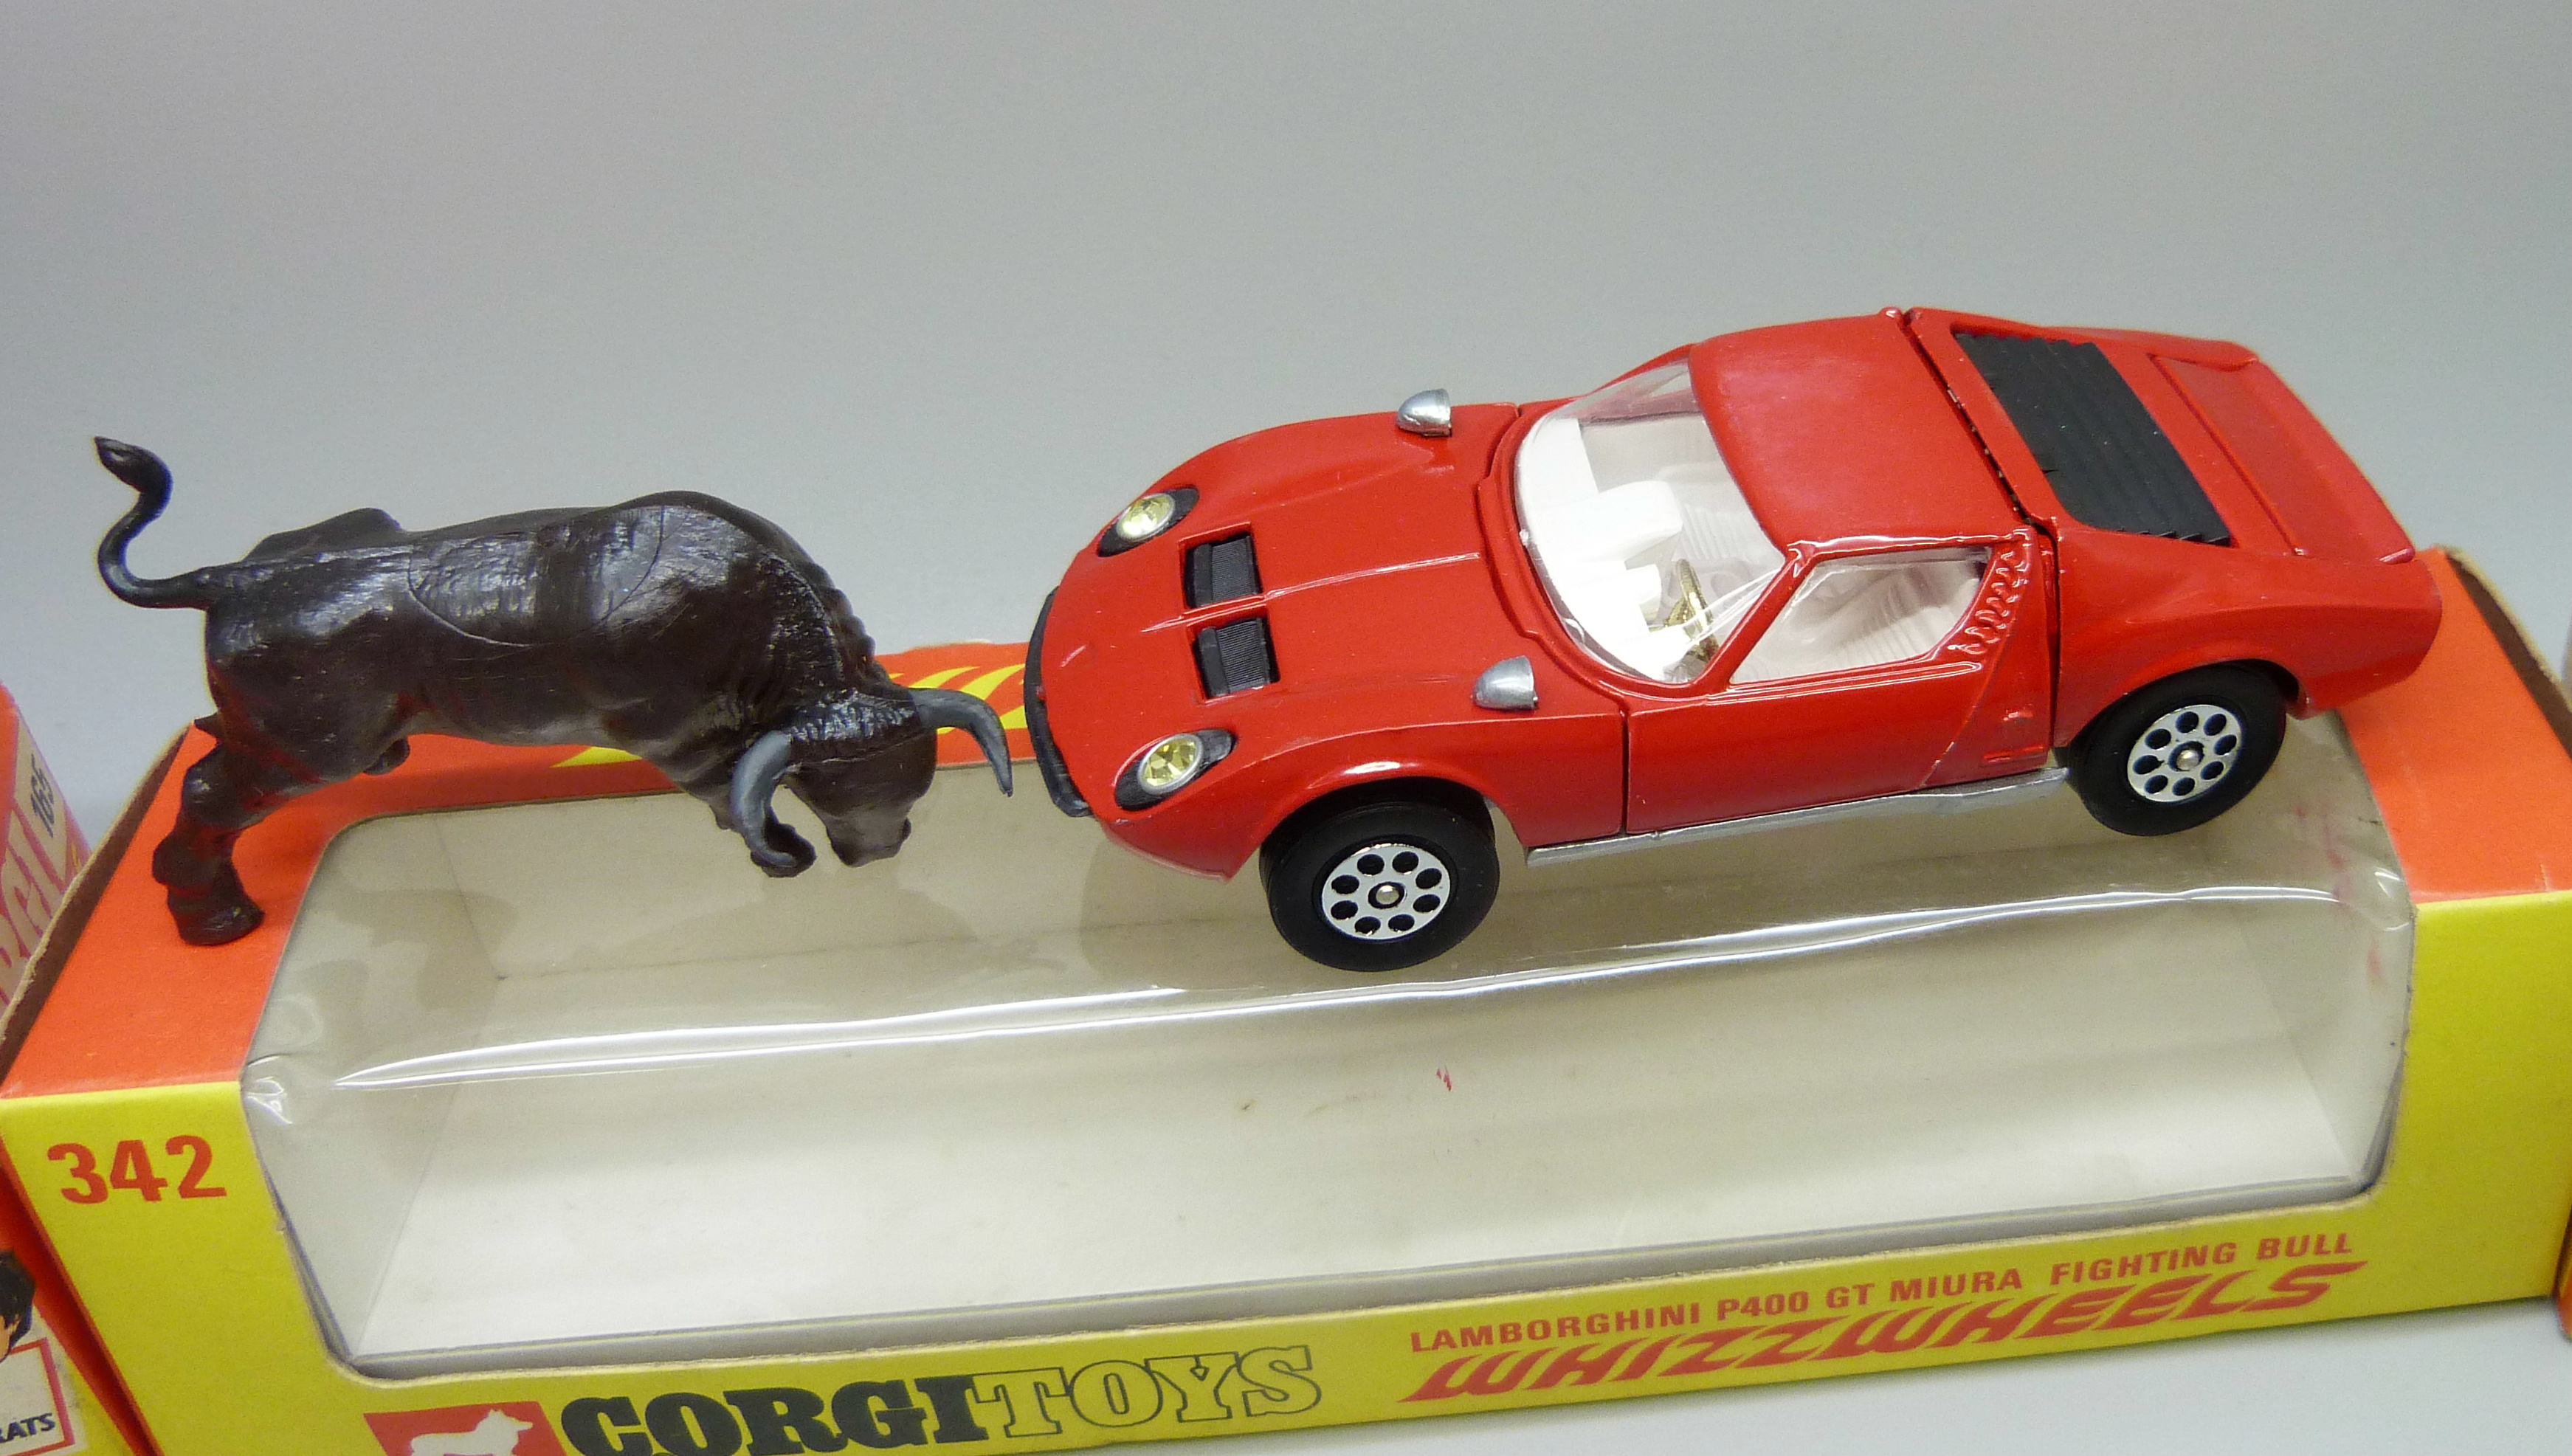 Three Corgi Toys Whizzwheels, 165, 372 and 342 Lamborghini P400 GT Miura Fighting Bull, boxed, ( - Image 3 of 6